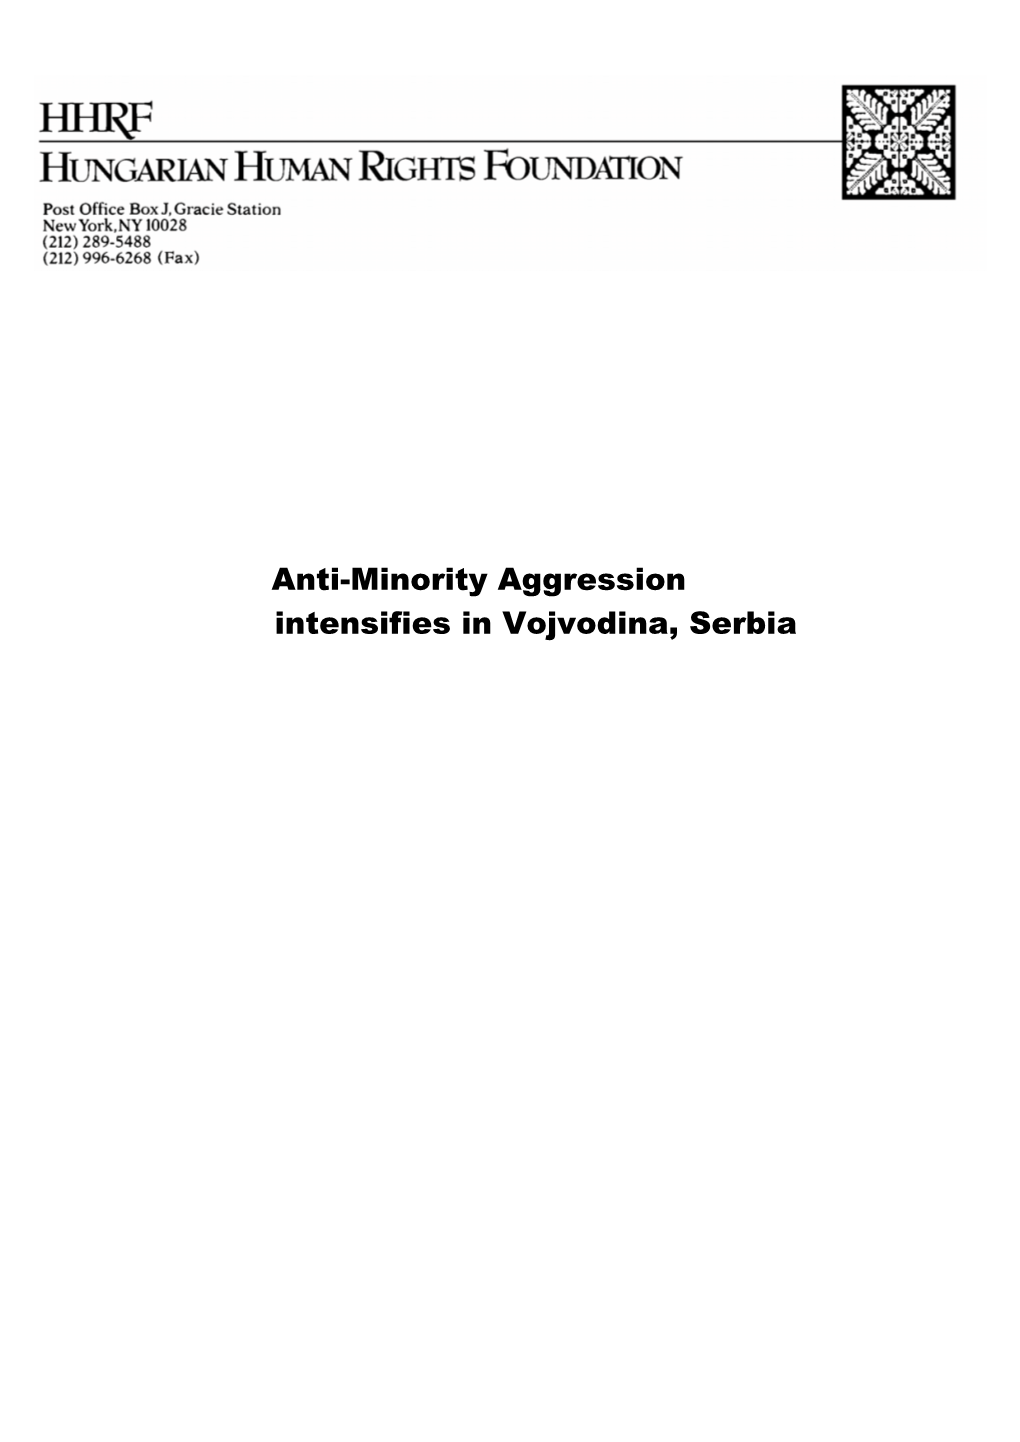 Anti-Minority Aggression Intensifies in Vojvodina, Serbia Anti-Minority Aggression Intensifies in Vojvodina, Serbia, During 2005